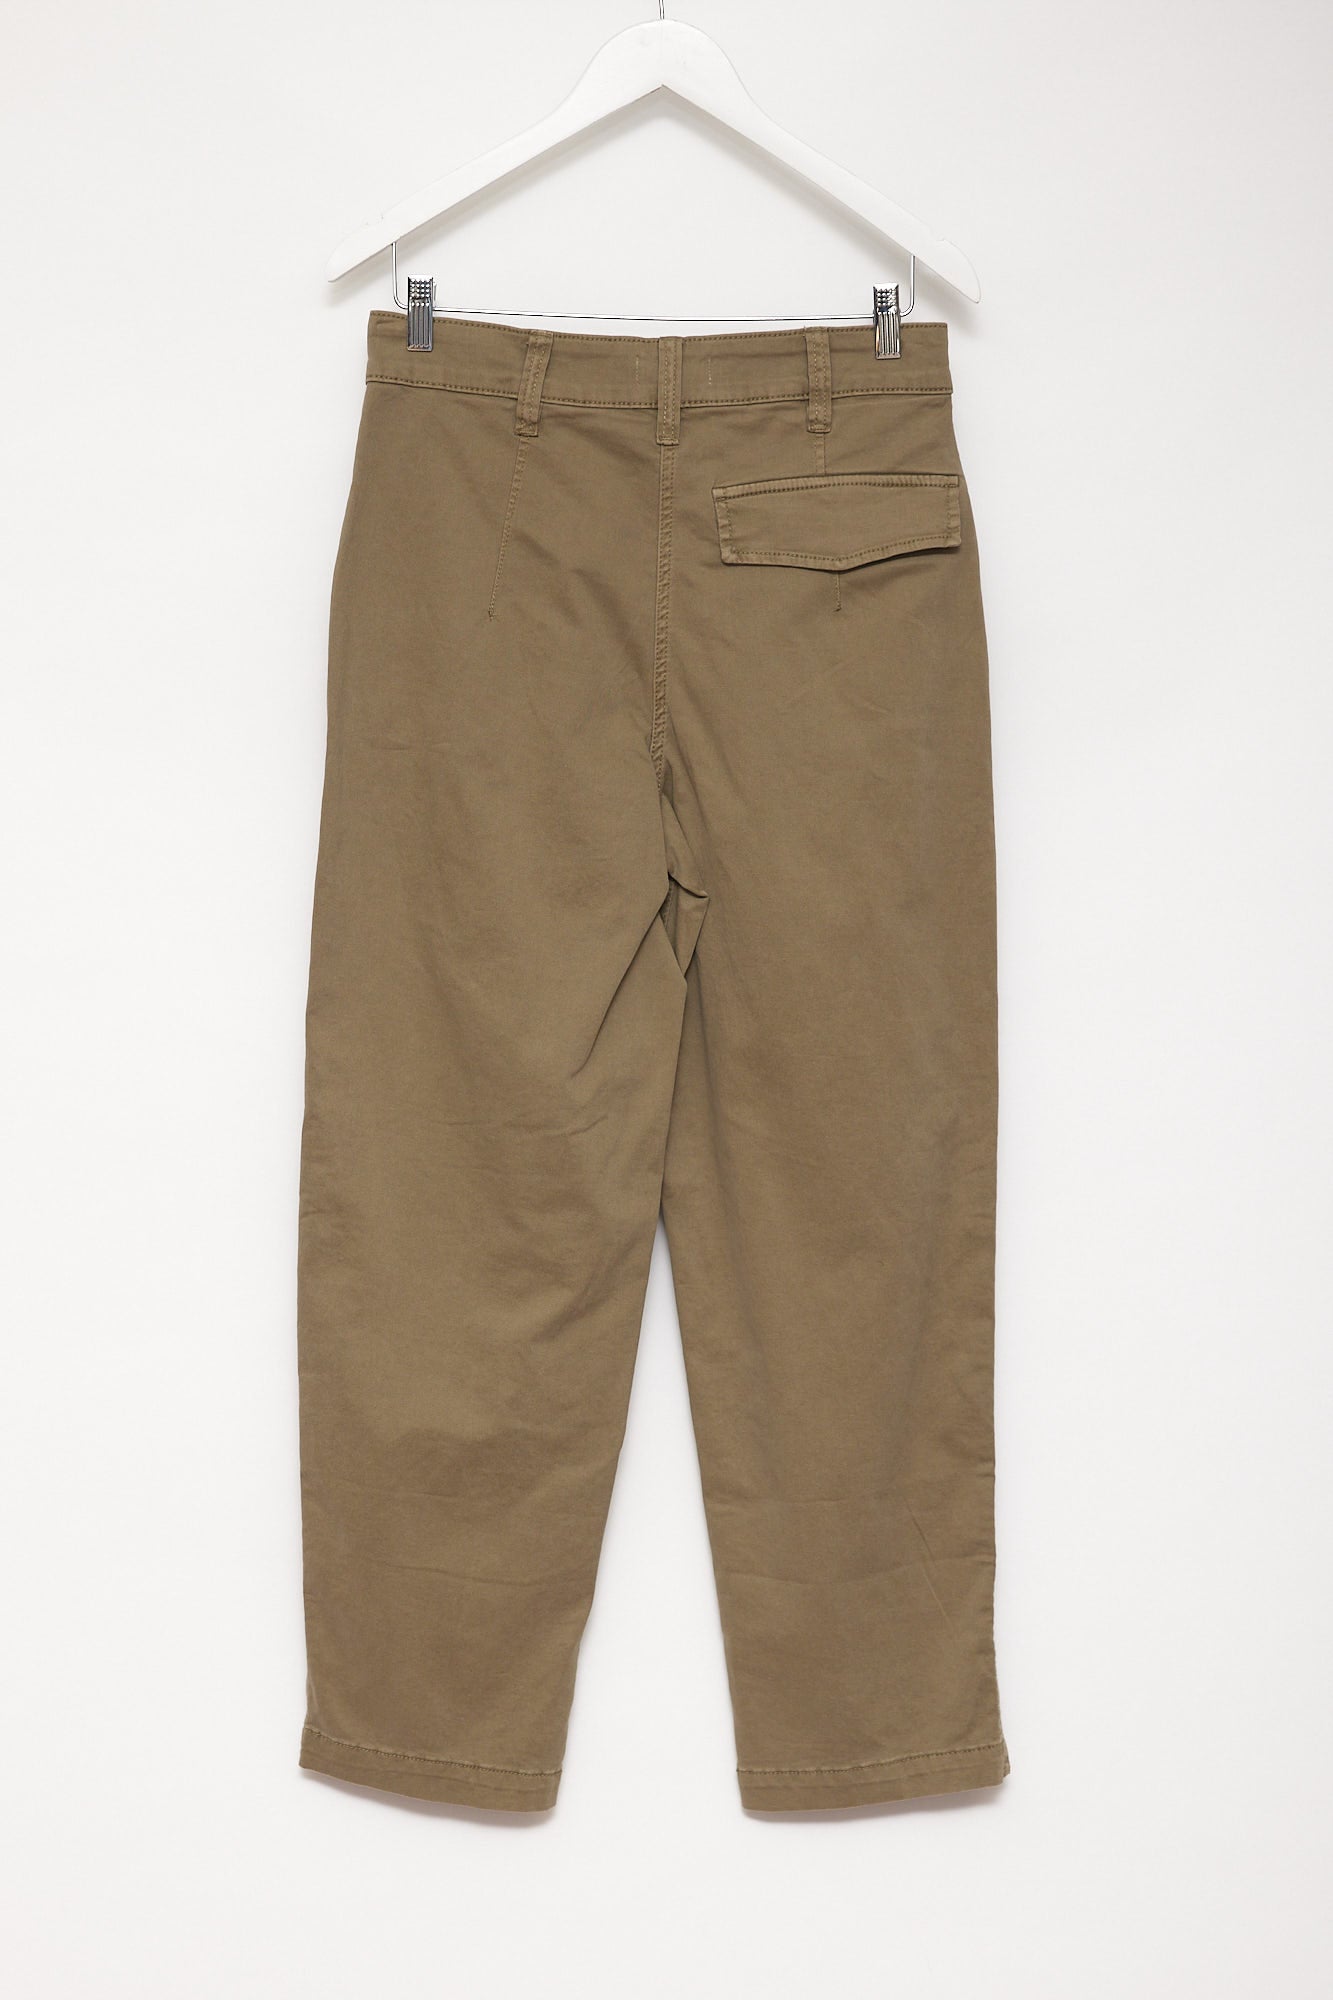 Womens Brown Khaki chino trousers size 12